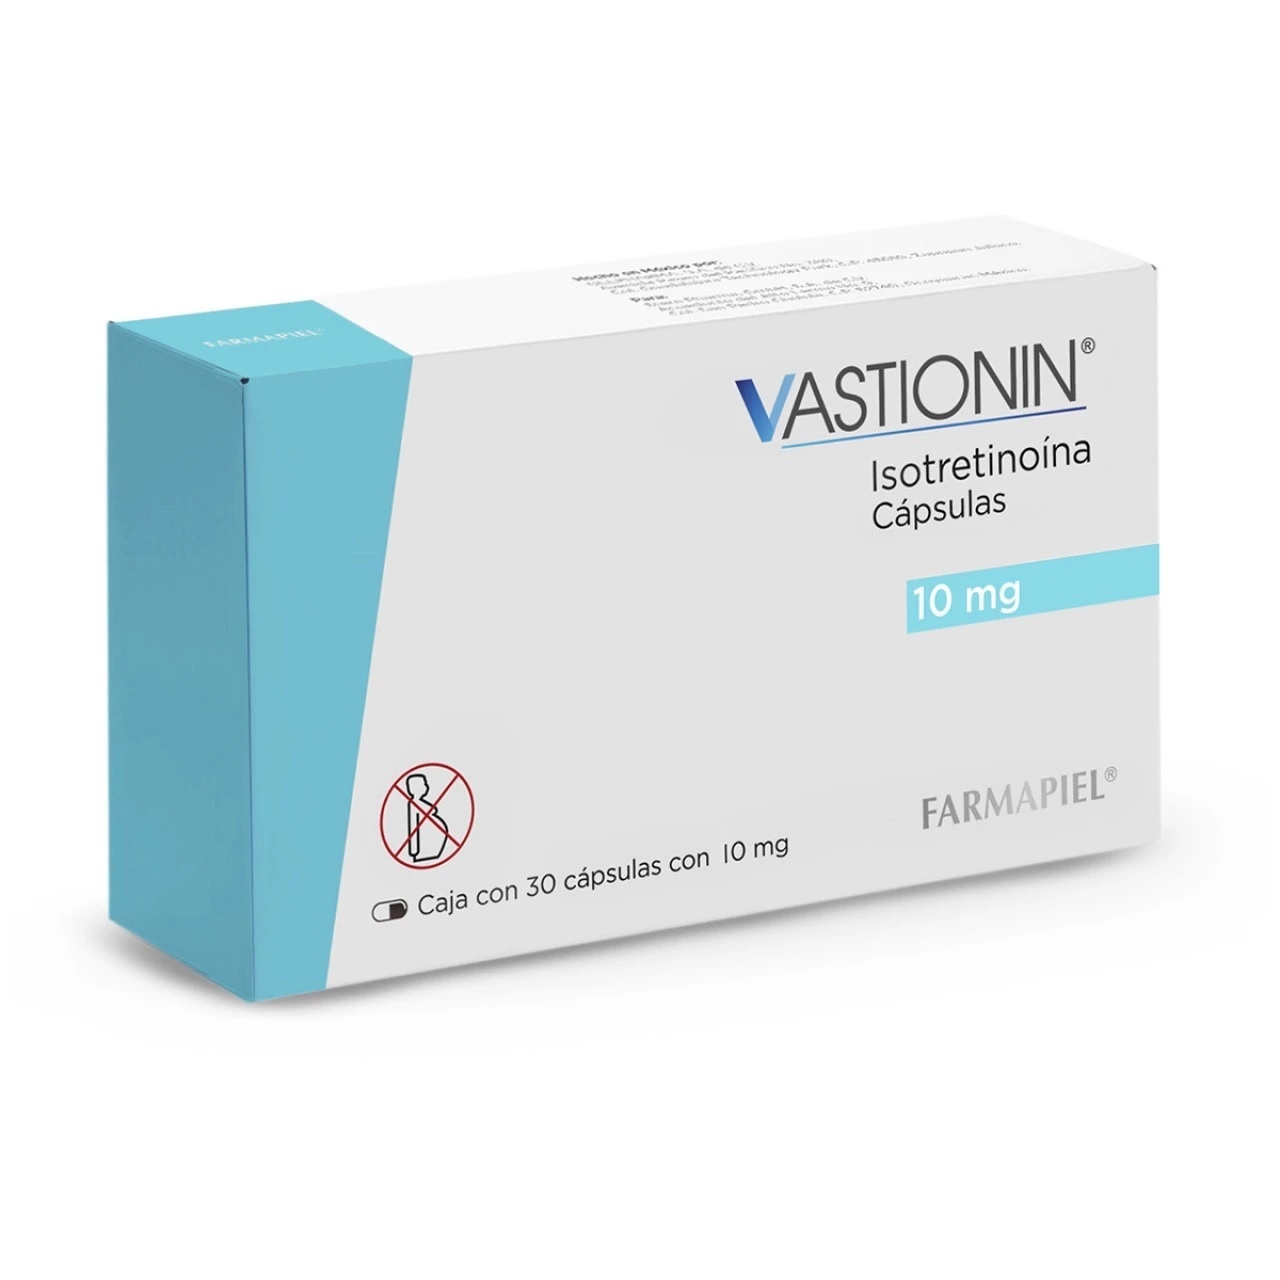 Vastionin 10 mg 30 caps (FARMAPIEL)